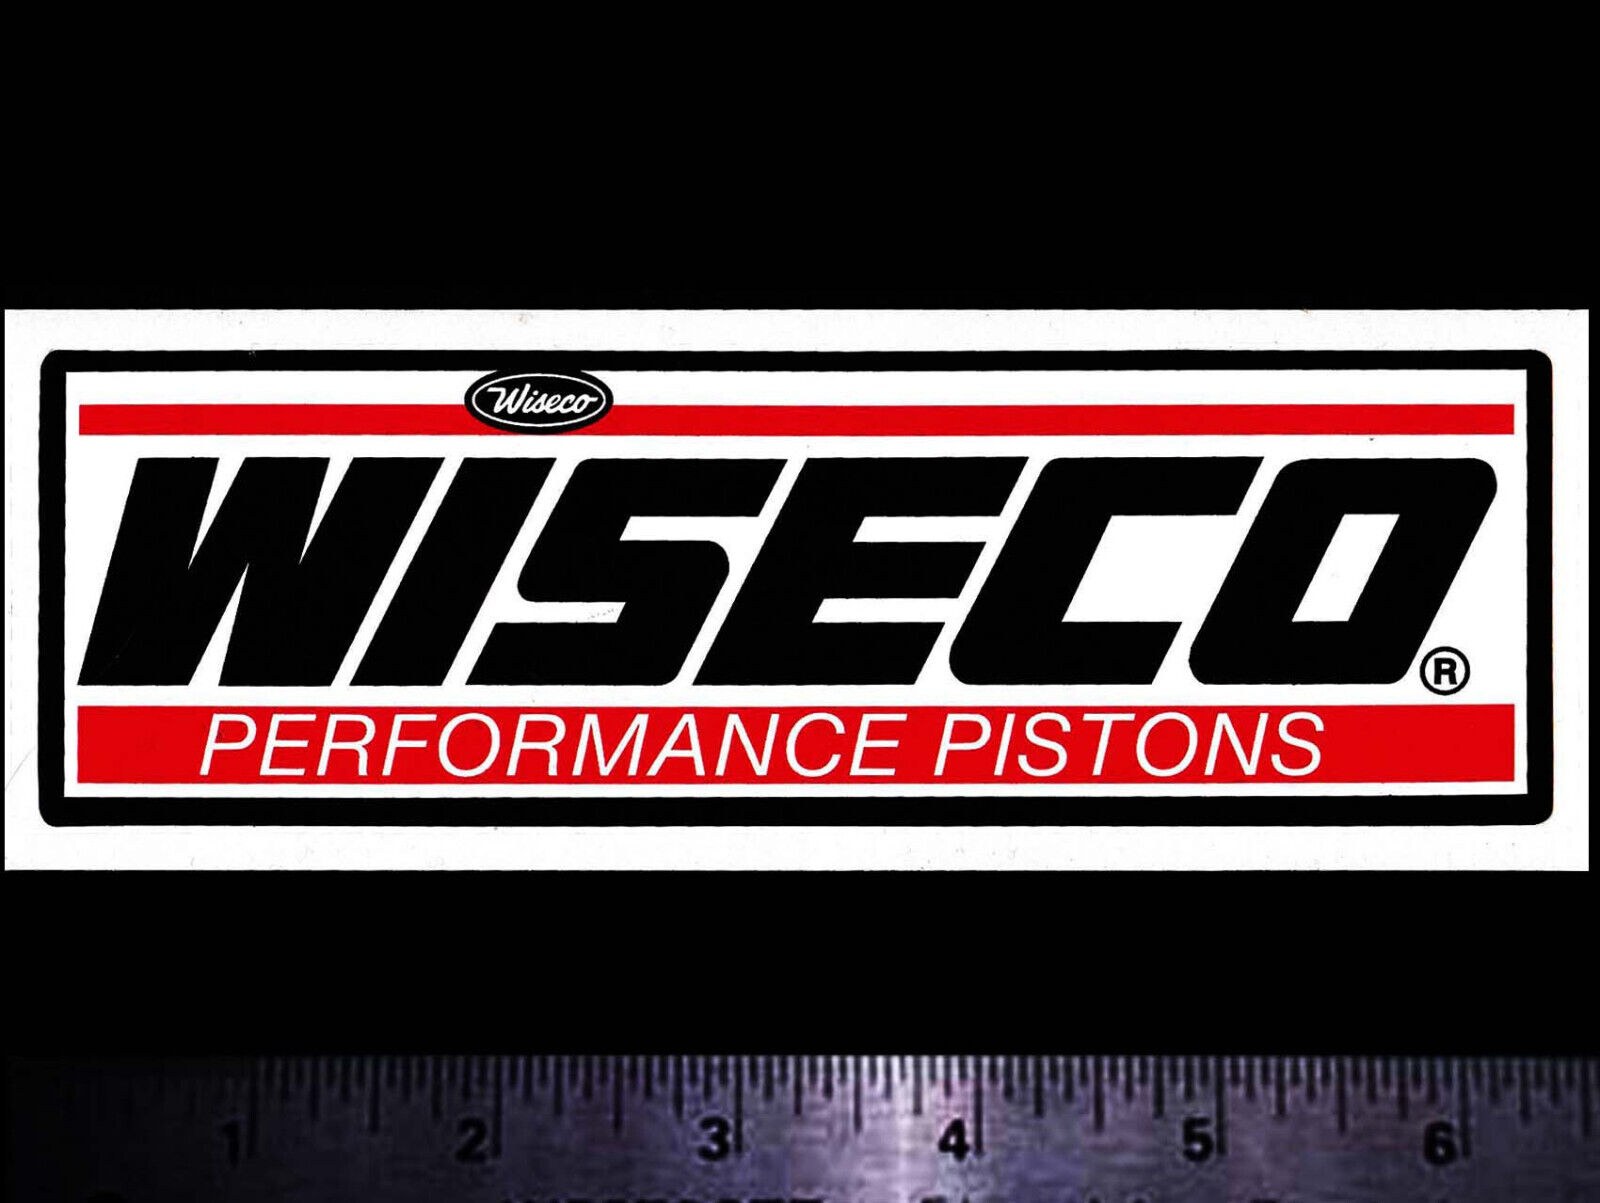 WISECO Performance Pistons - Original Vintage 1970's 80's Racing Decal/Sticker